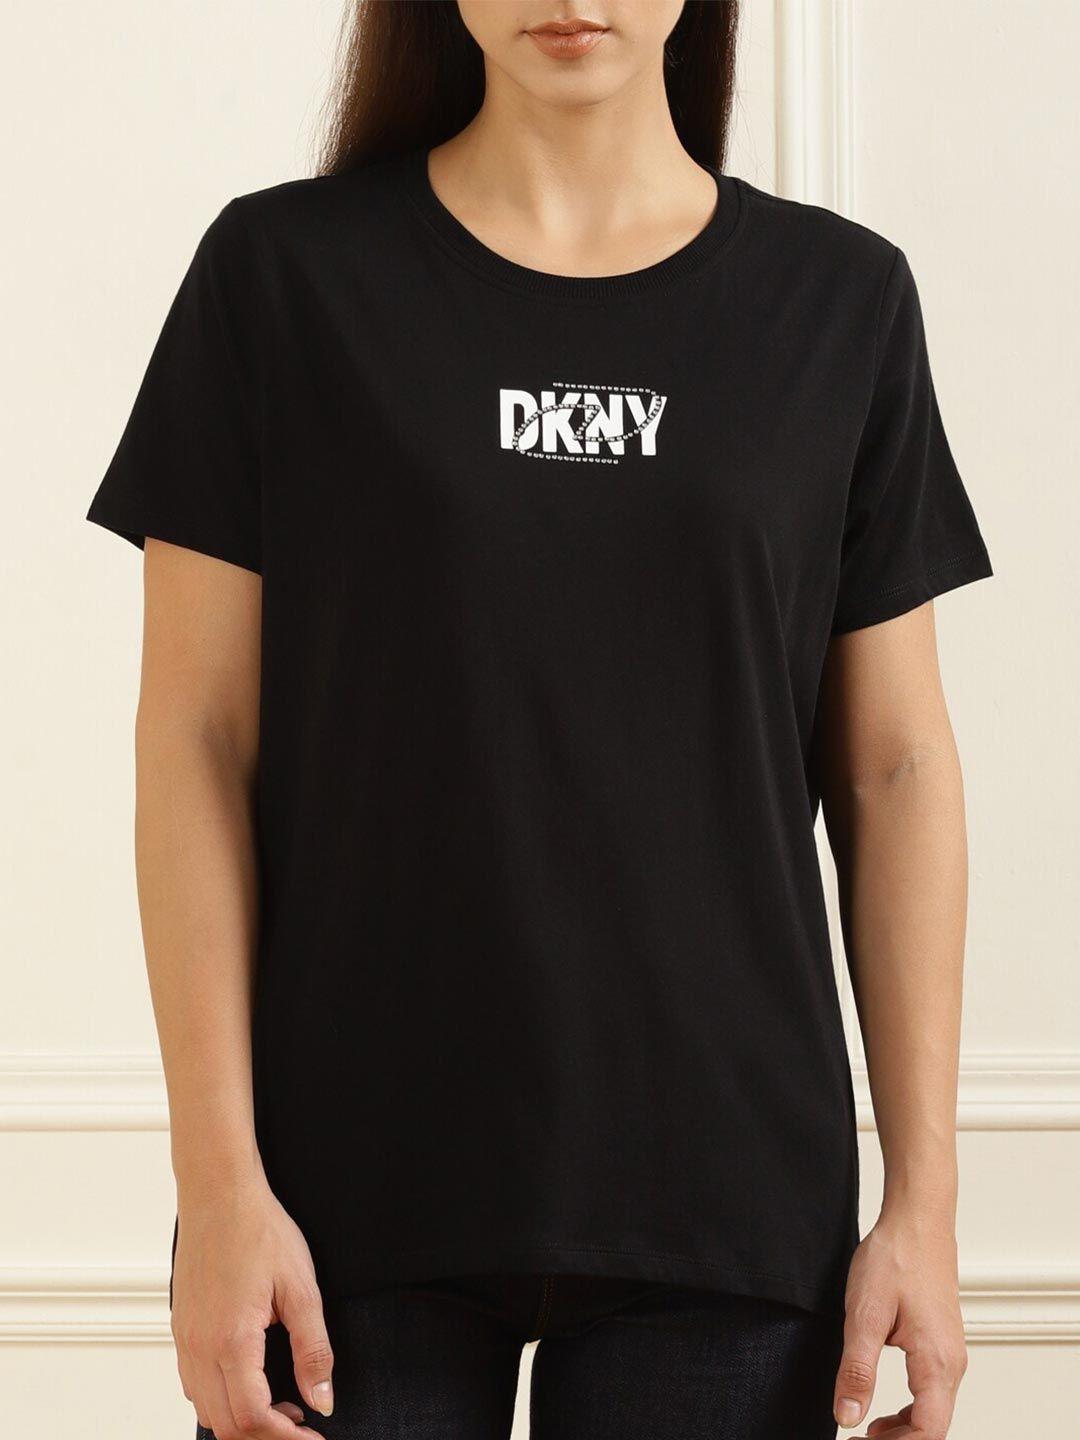 dkny-women-black-typography-pure-cotton-t-shirt